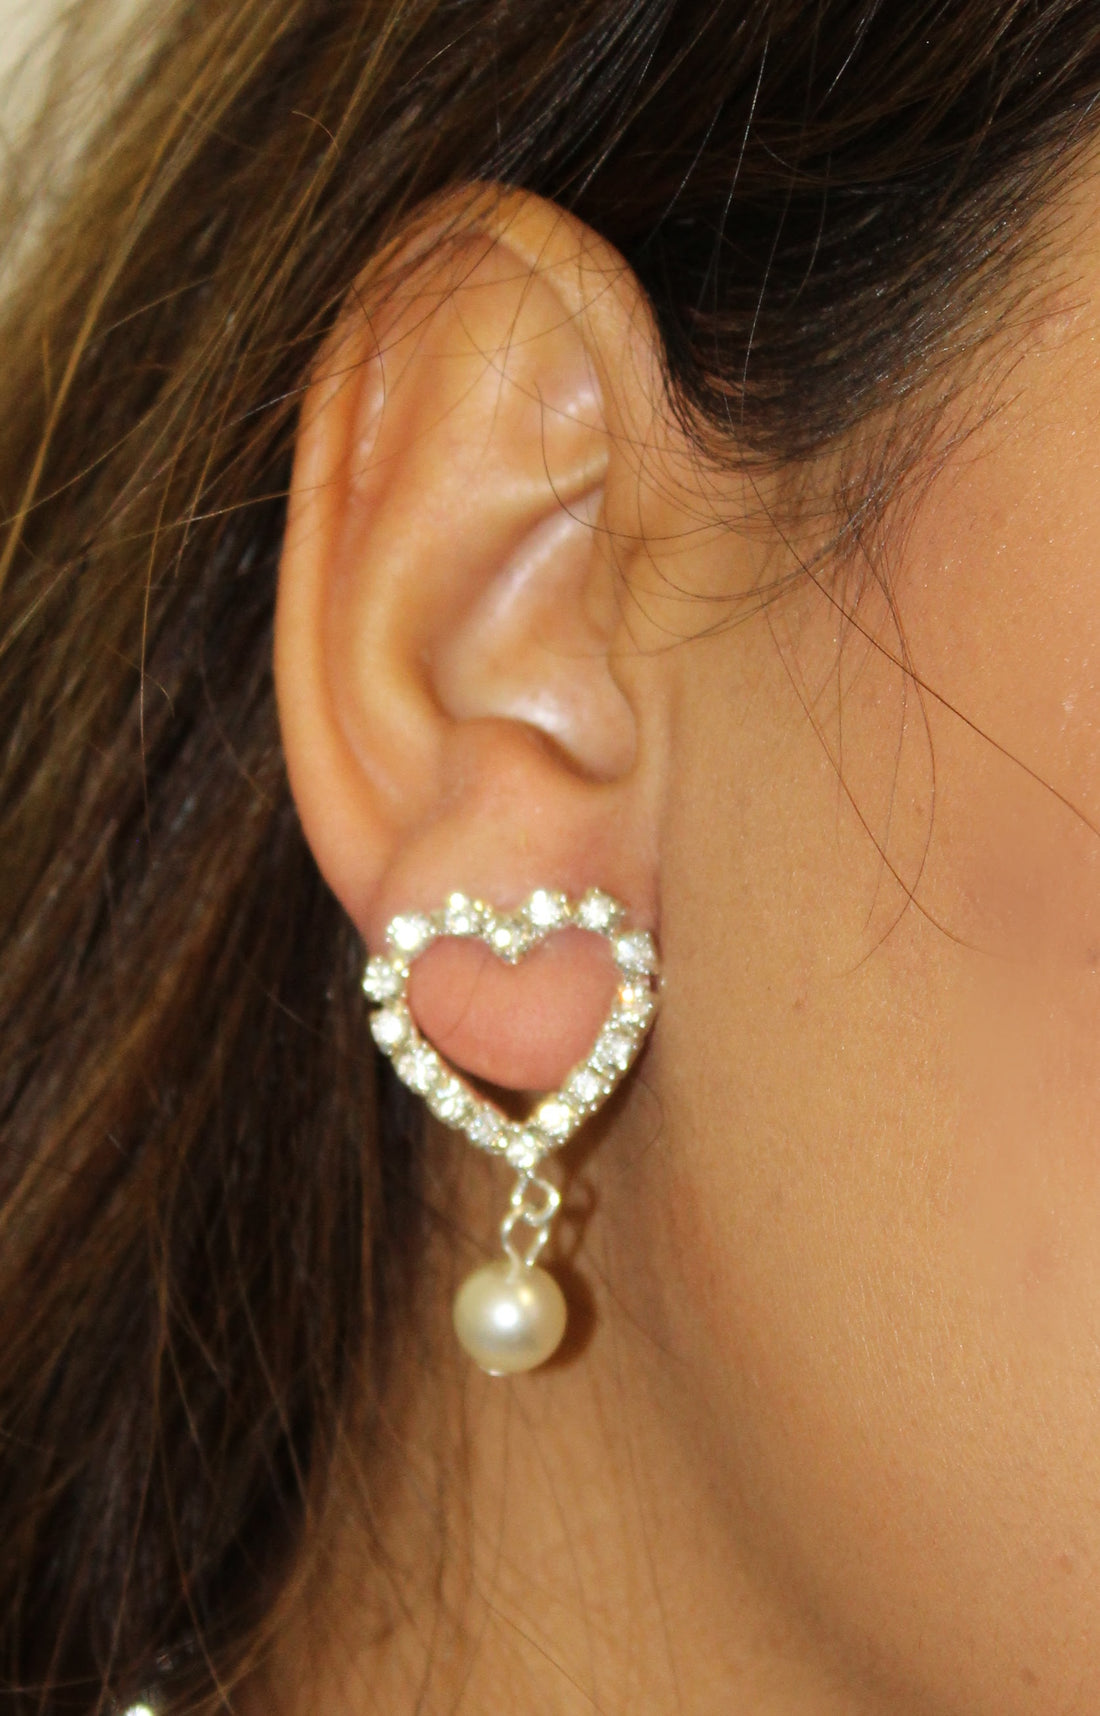 Swarovski Crystal Earring Necklace set TL3018